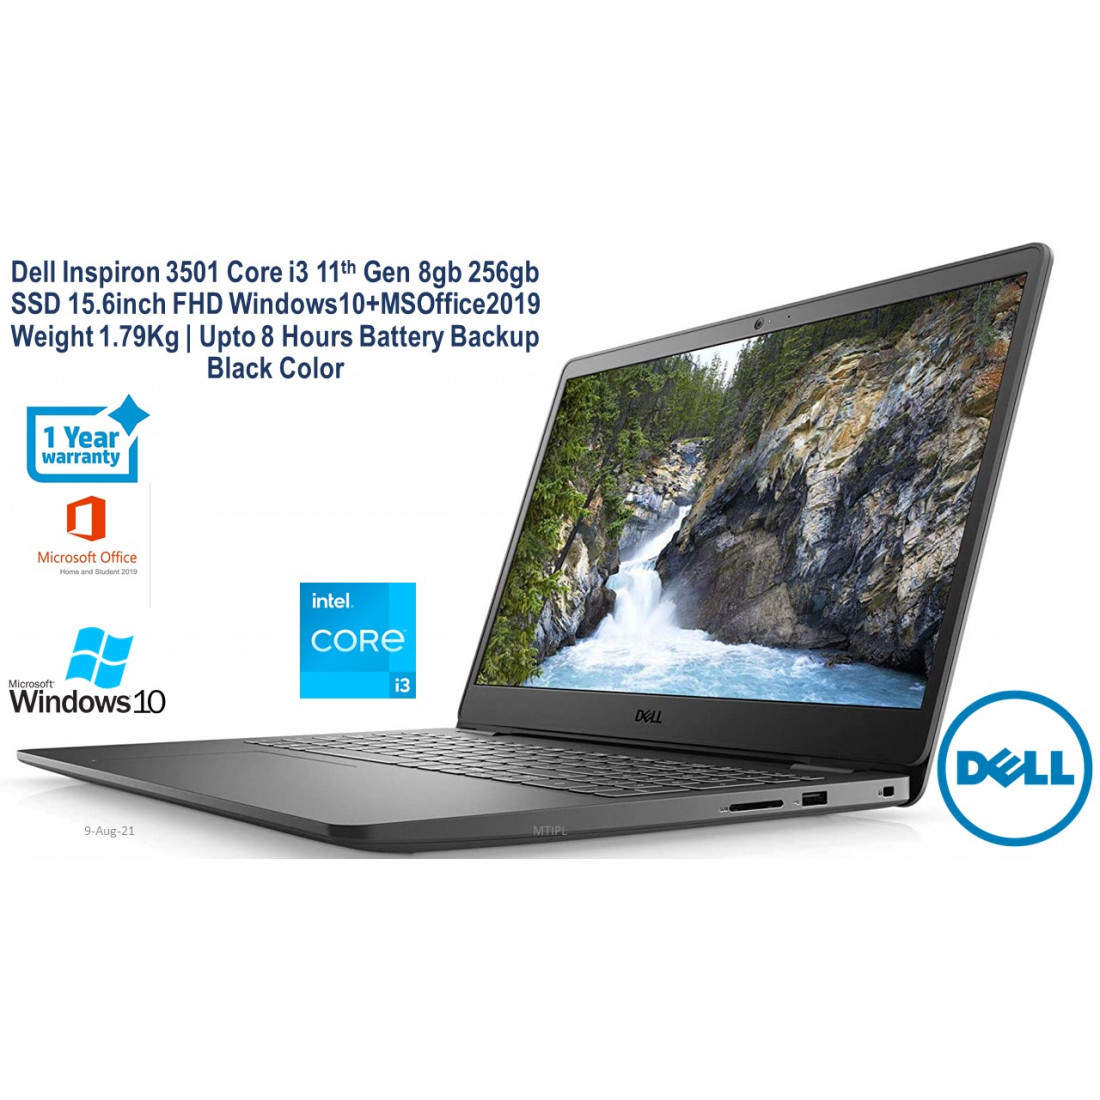 Dell 3501 Laptop | Dell Inspiron 3501 Laptop Fhd | Dell Laptops I3